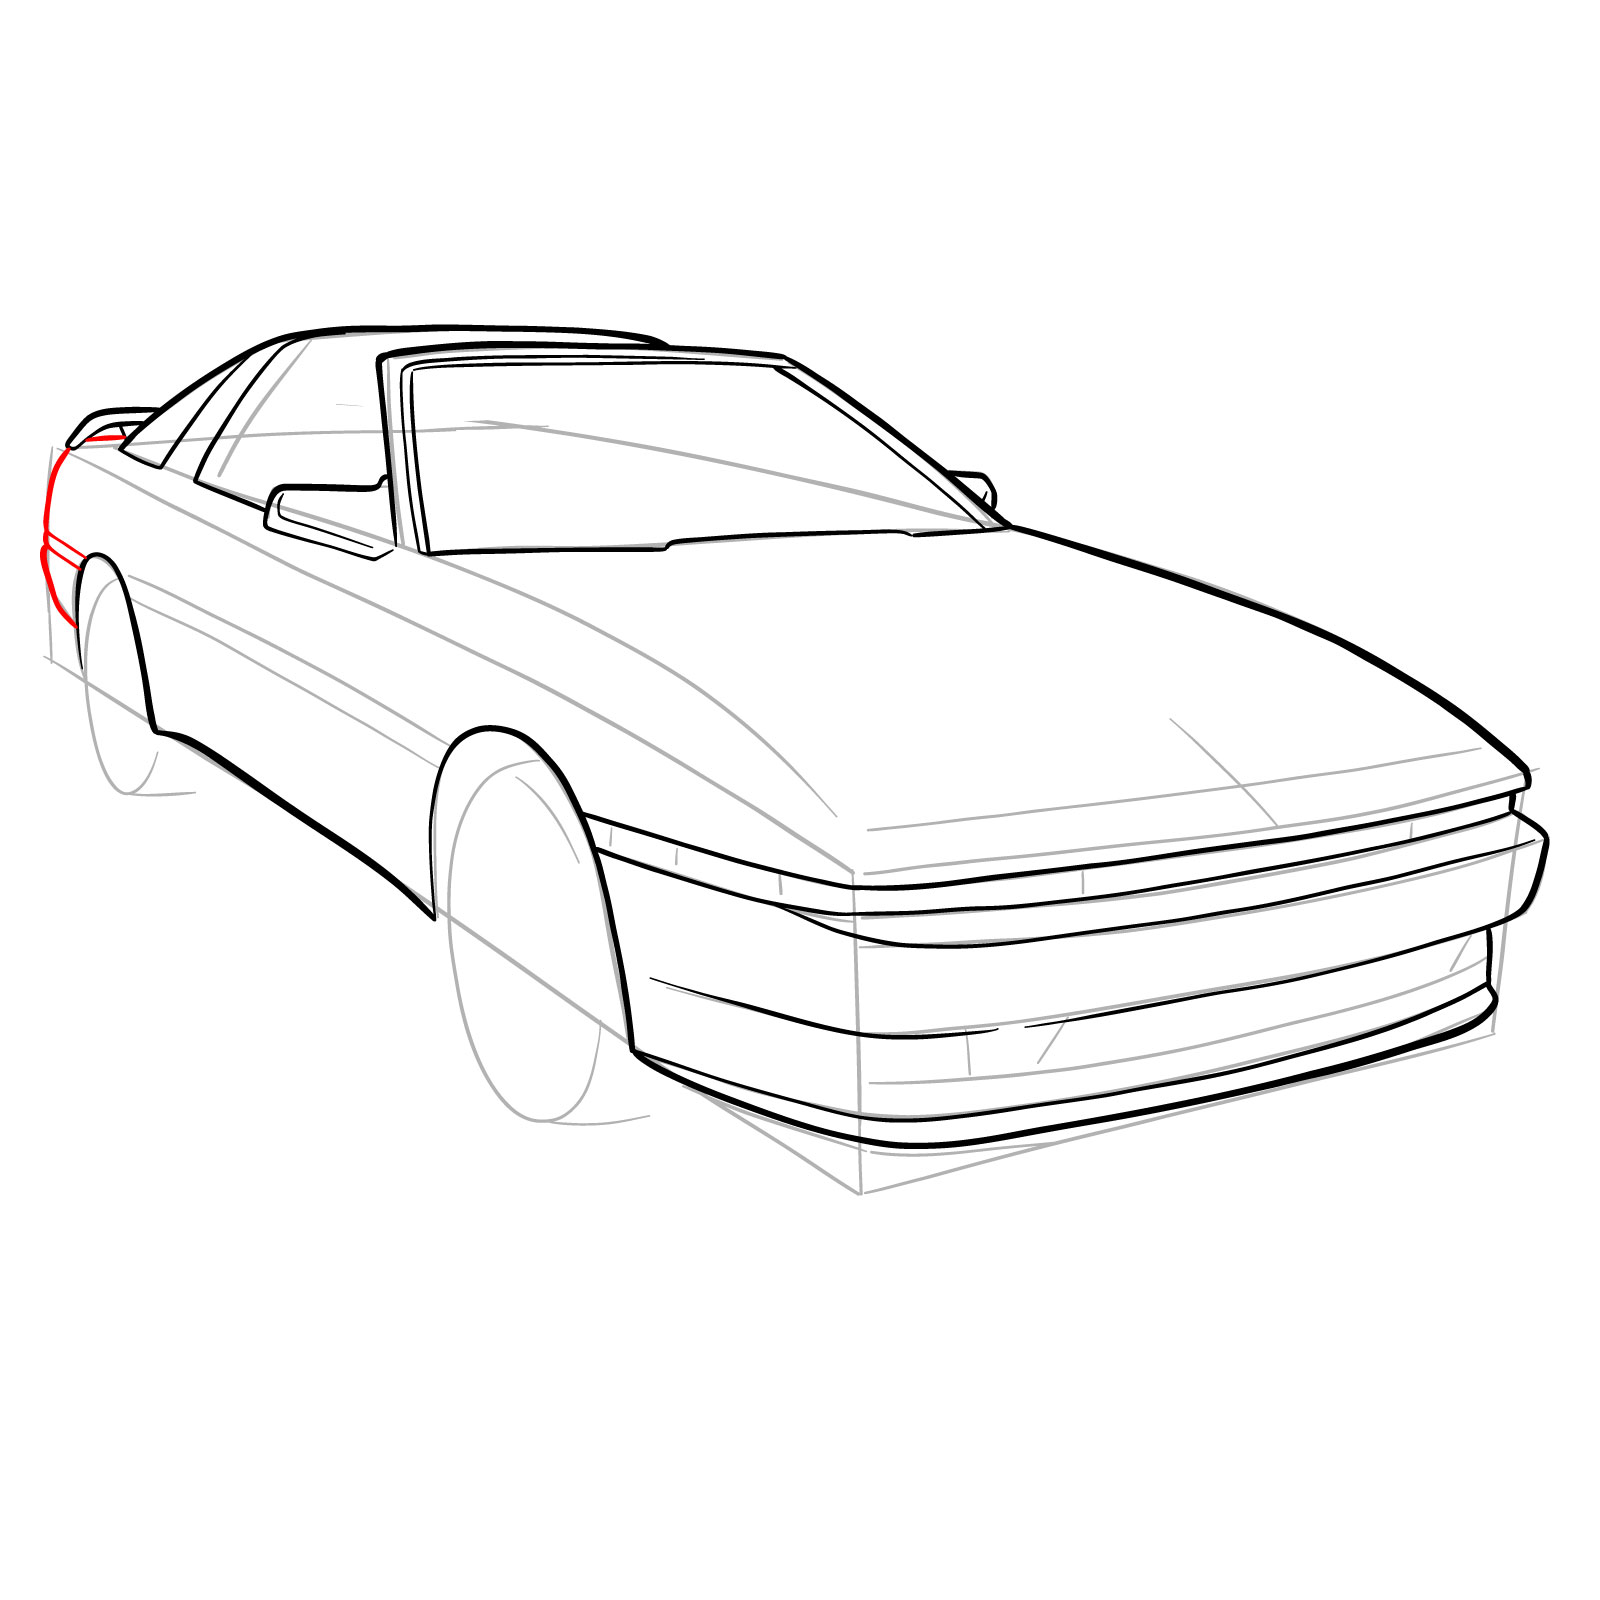 How to draw a 1988 Toyota Supra Turbo MK 3 - step 16